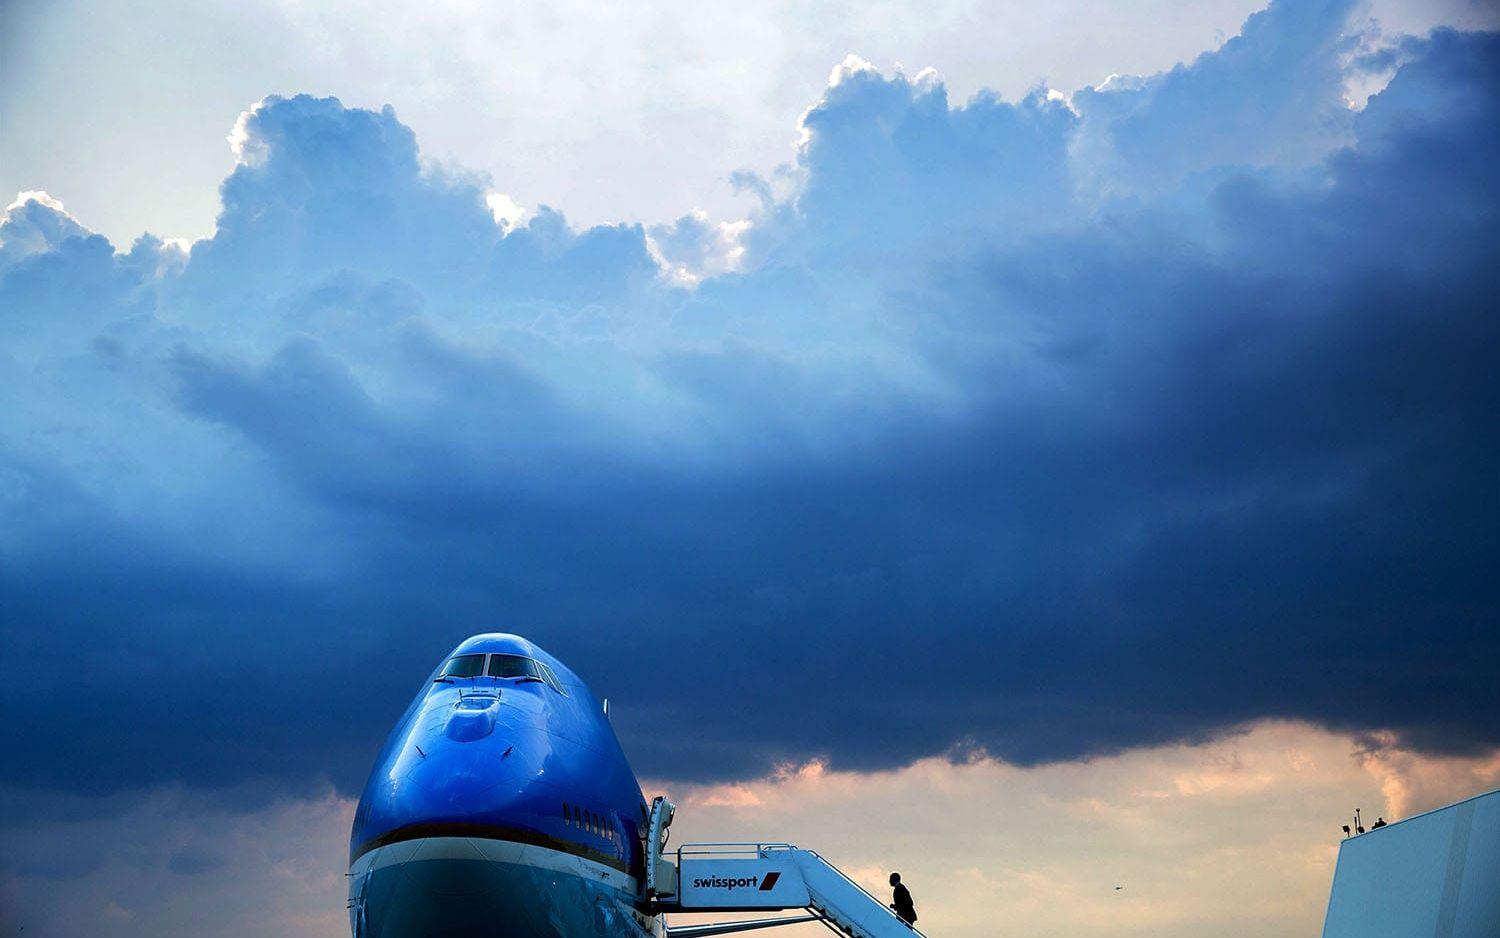 21 juli 2015: Obama på väg ombord Air Force One i New York. Foto: Pete Souza / Vita Huset